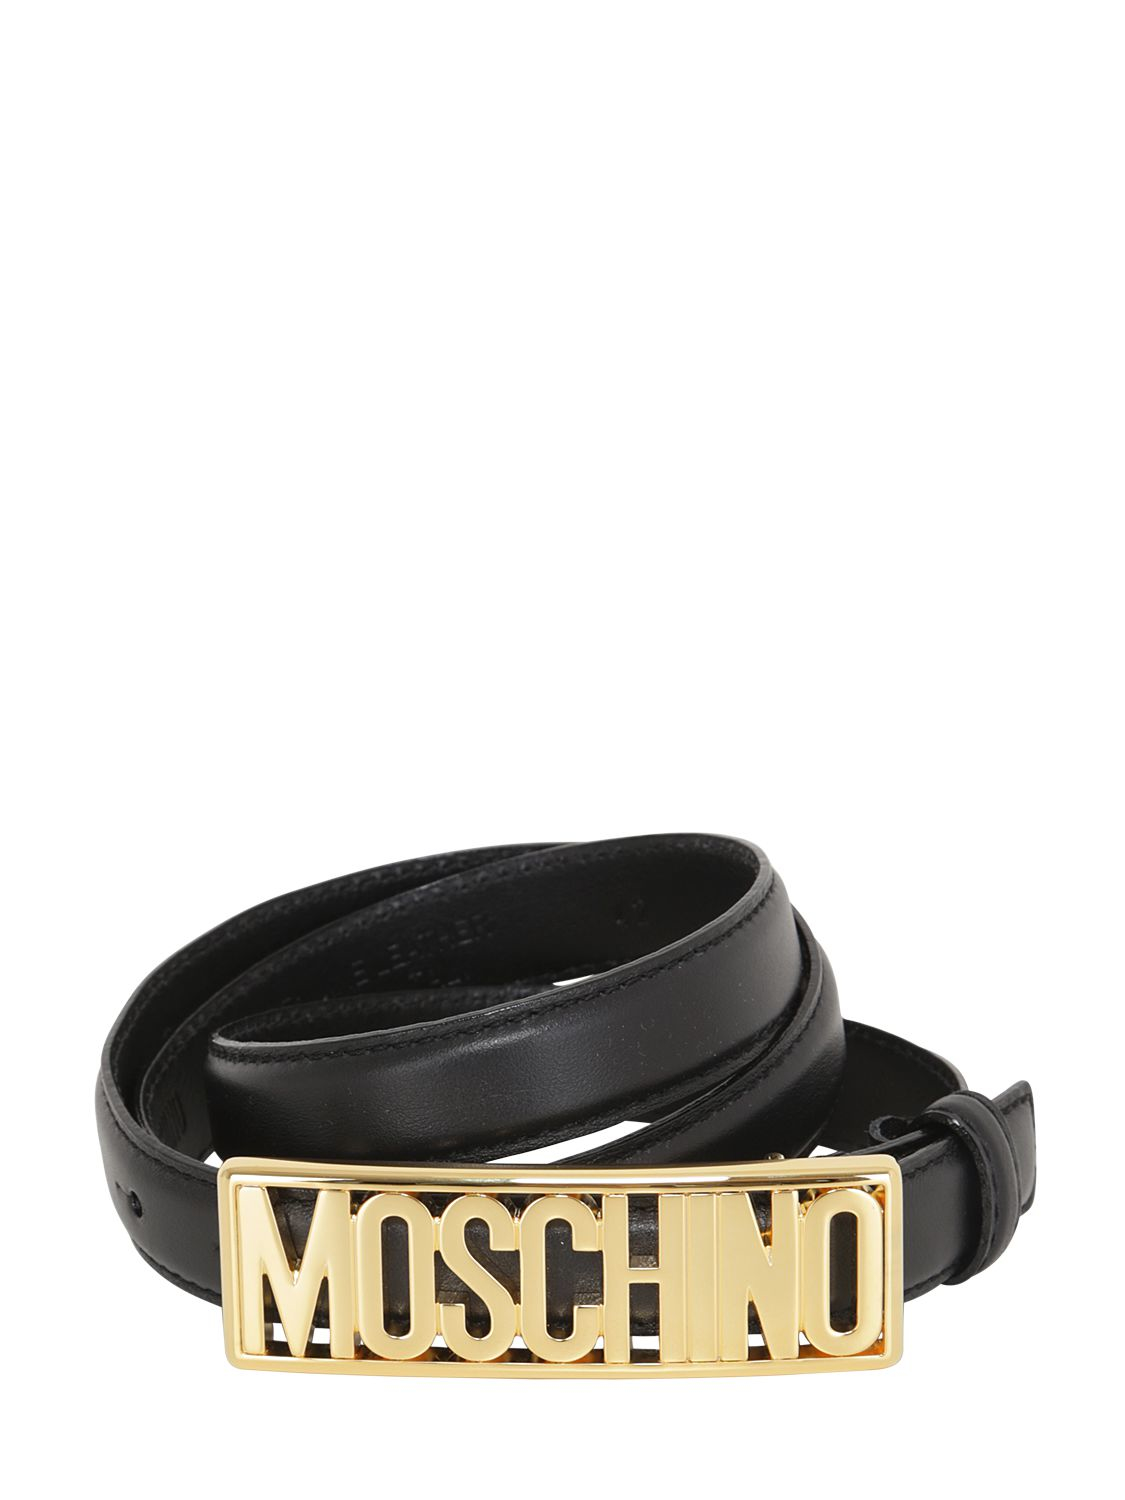 Lyst - Moschino 15mm Logo Lettering Leather Belt in Black for Men